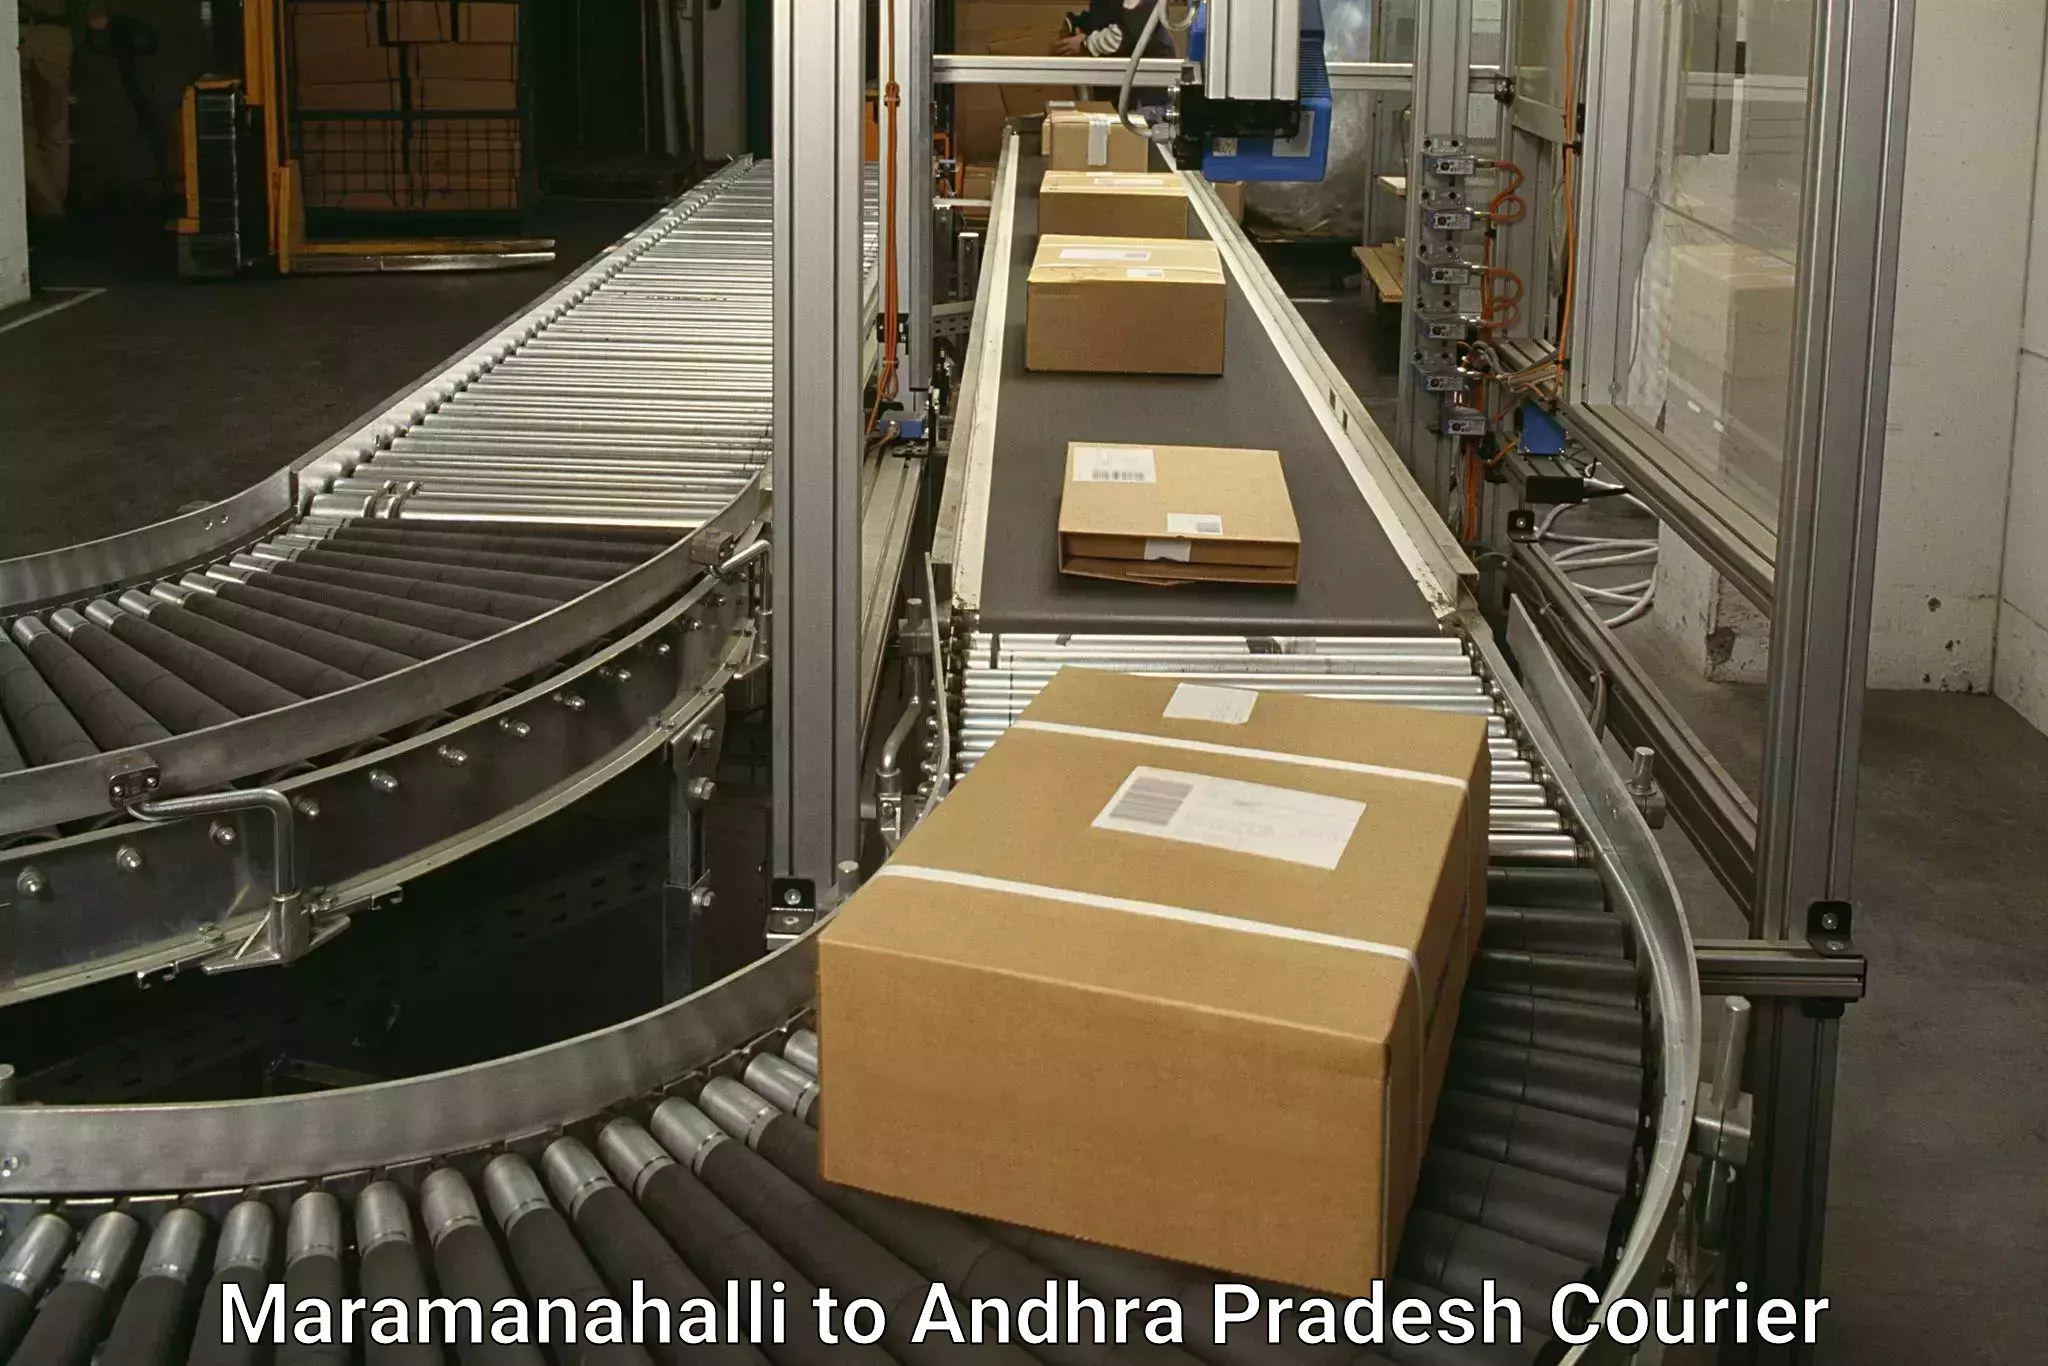 Speedy delivery service Maramanahalli to Velgodu